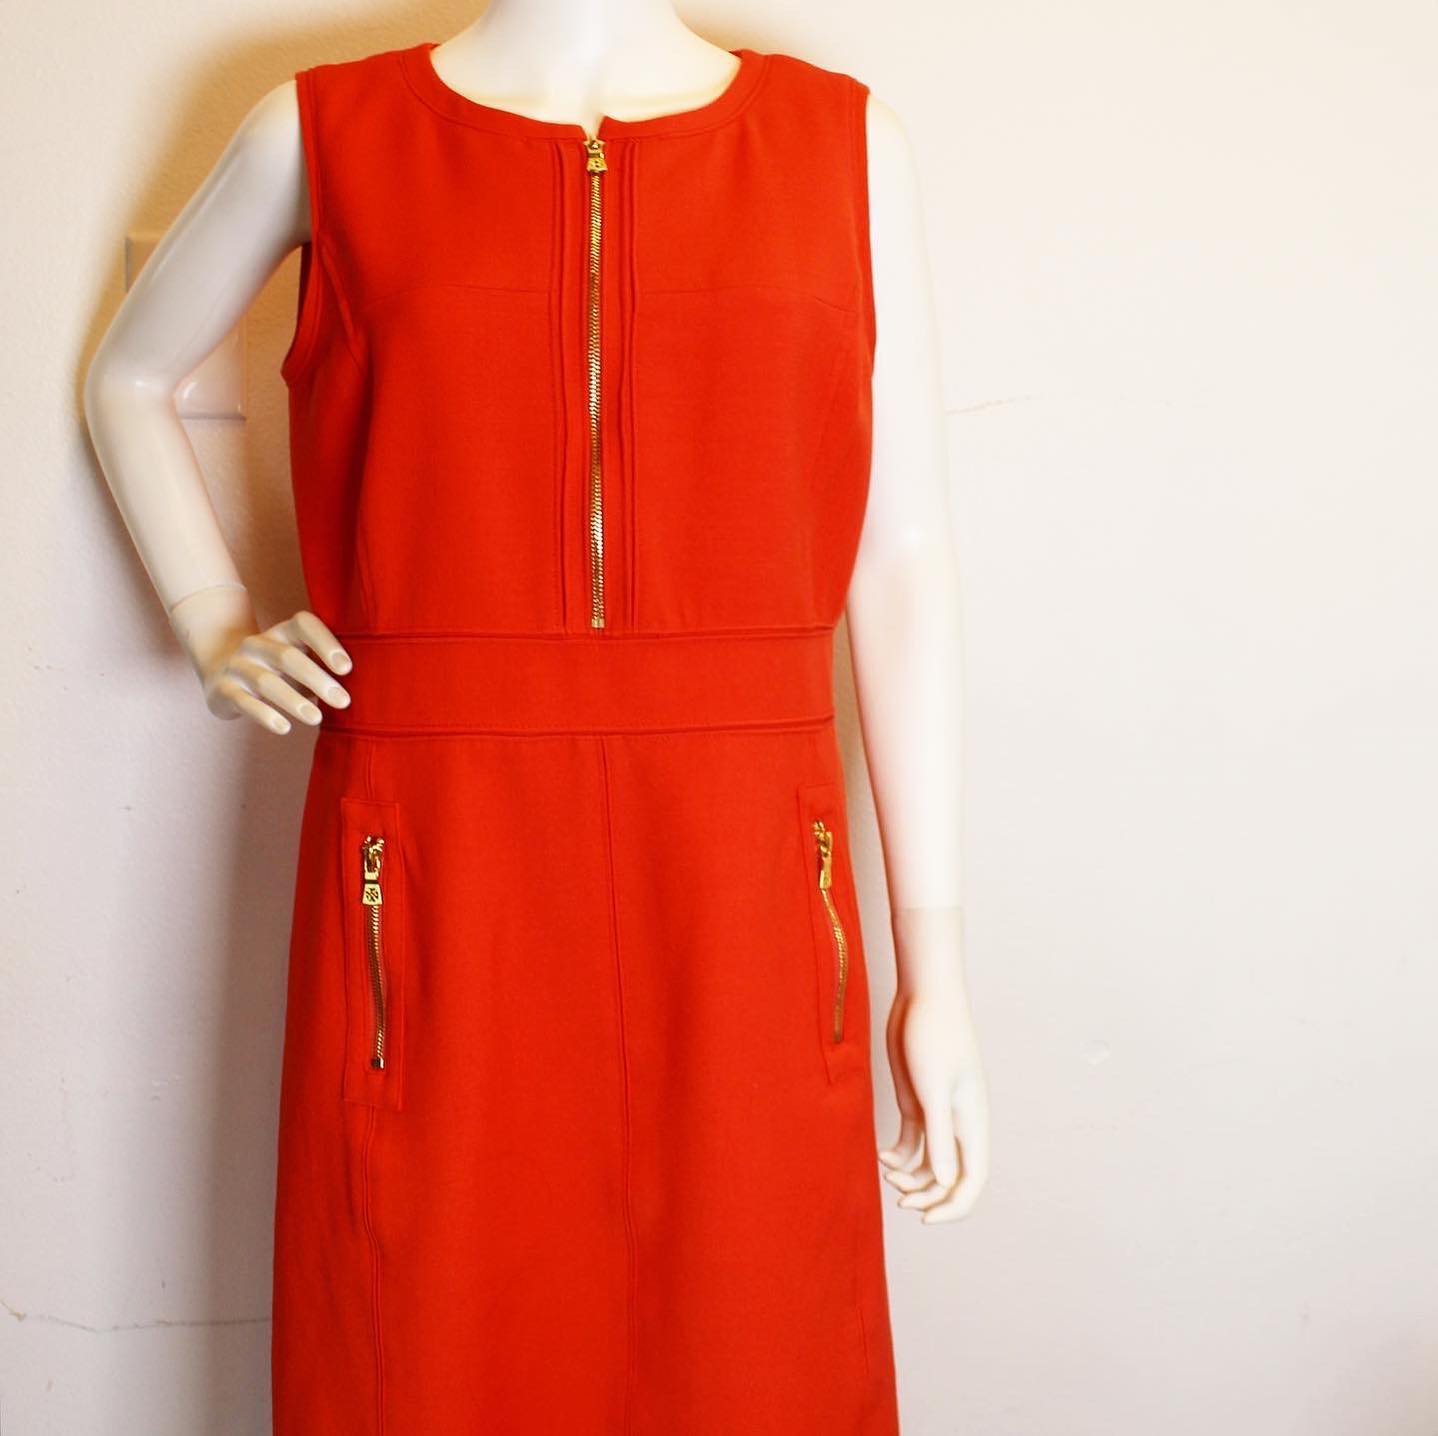 TORY BURCH 41485 Orange Zip Up Sleeveless Dress Size 10 1